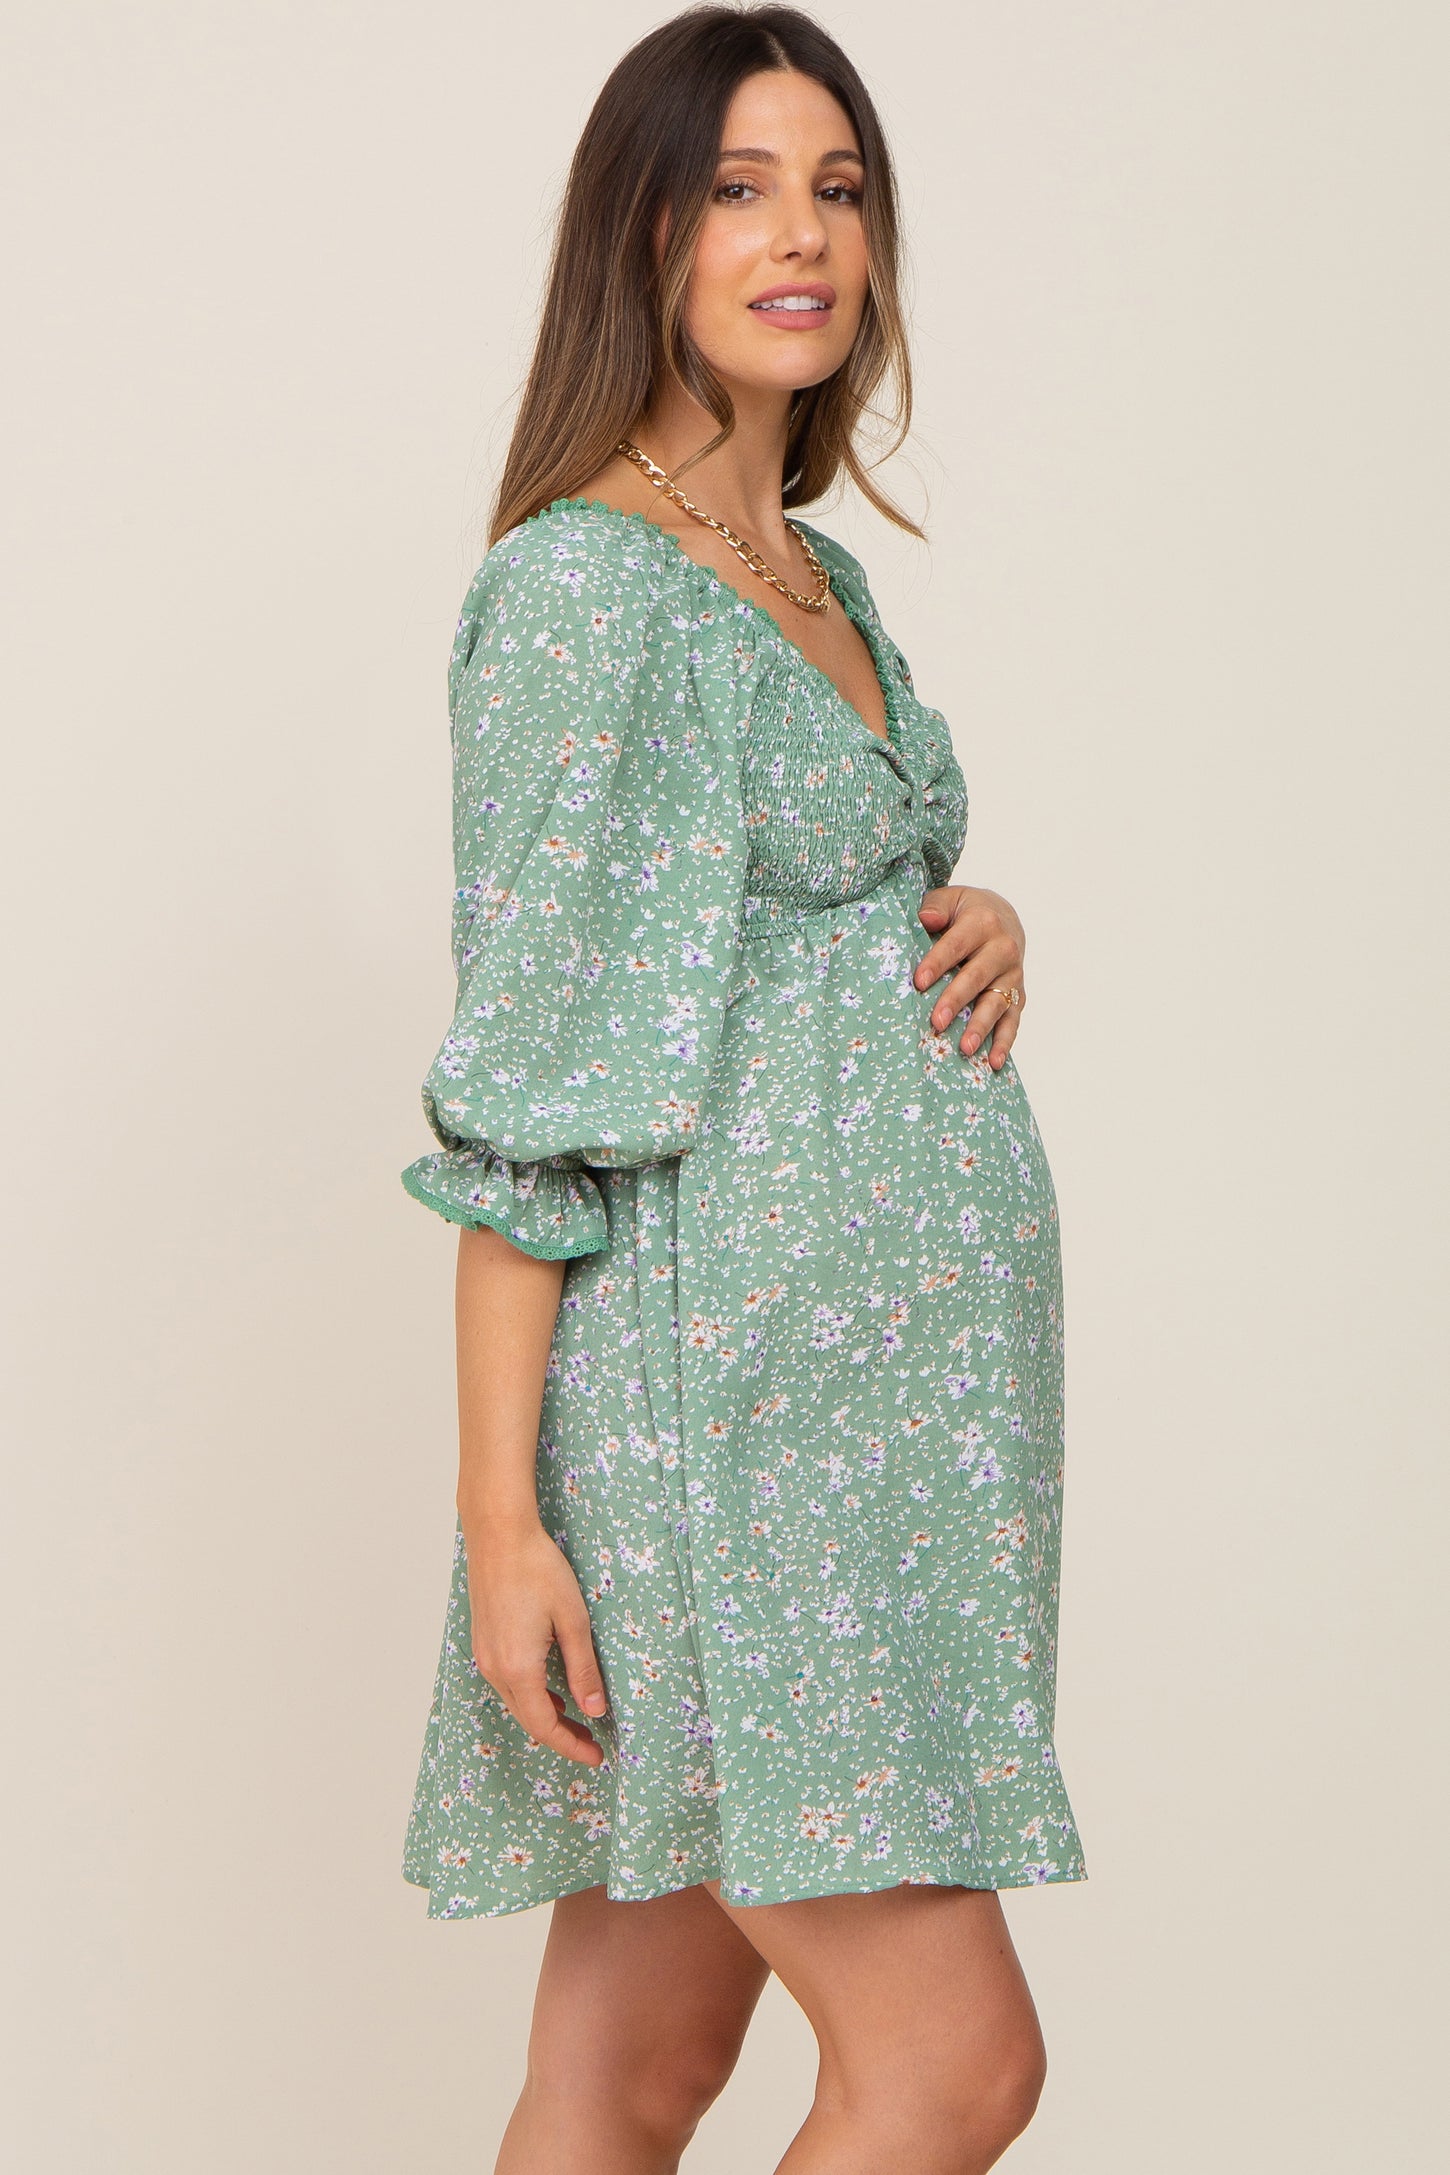 Mint Floral 3/4 Sleeve Maternity Dress